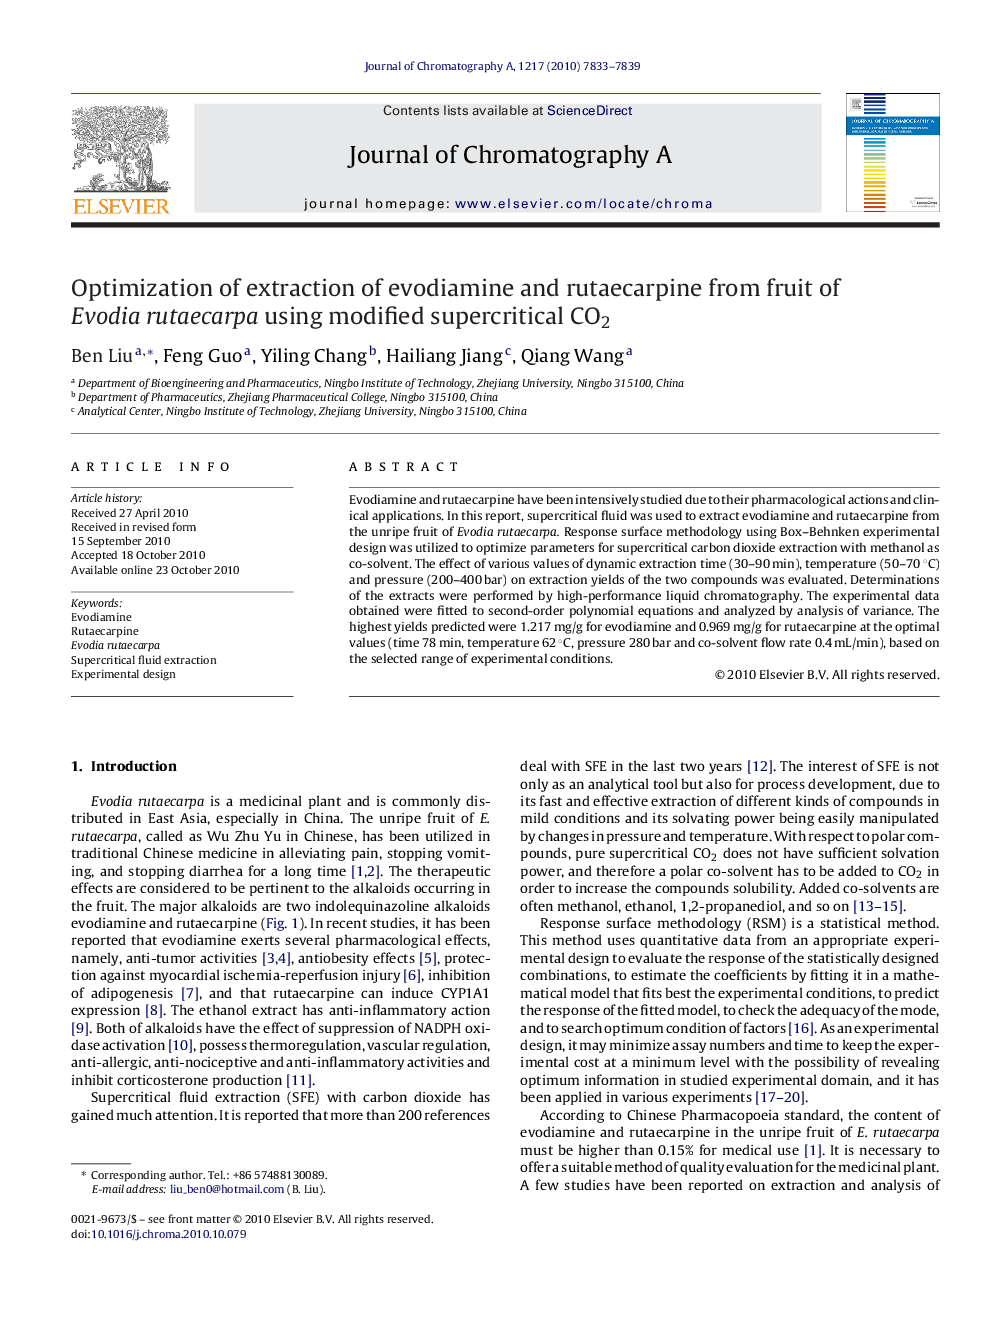 Optimization of extraction of evodiamine and rutaecarpine from fruit of Evodia rutaecarpa using modified supercritical CO2